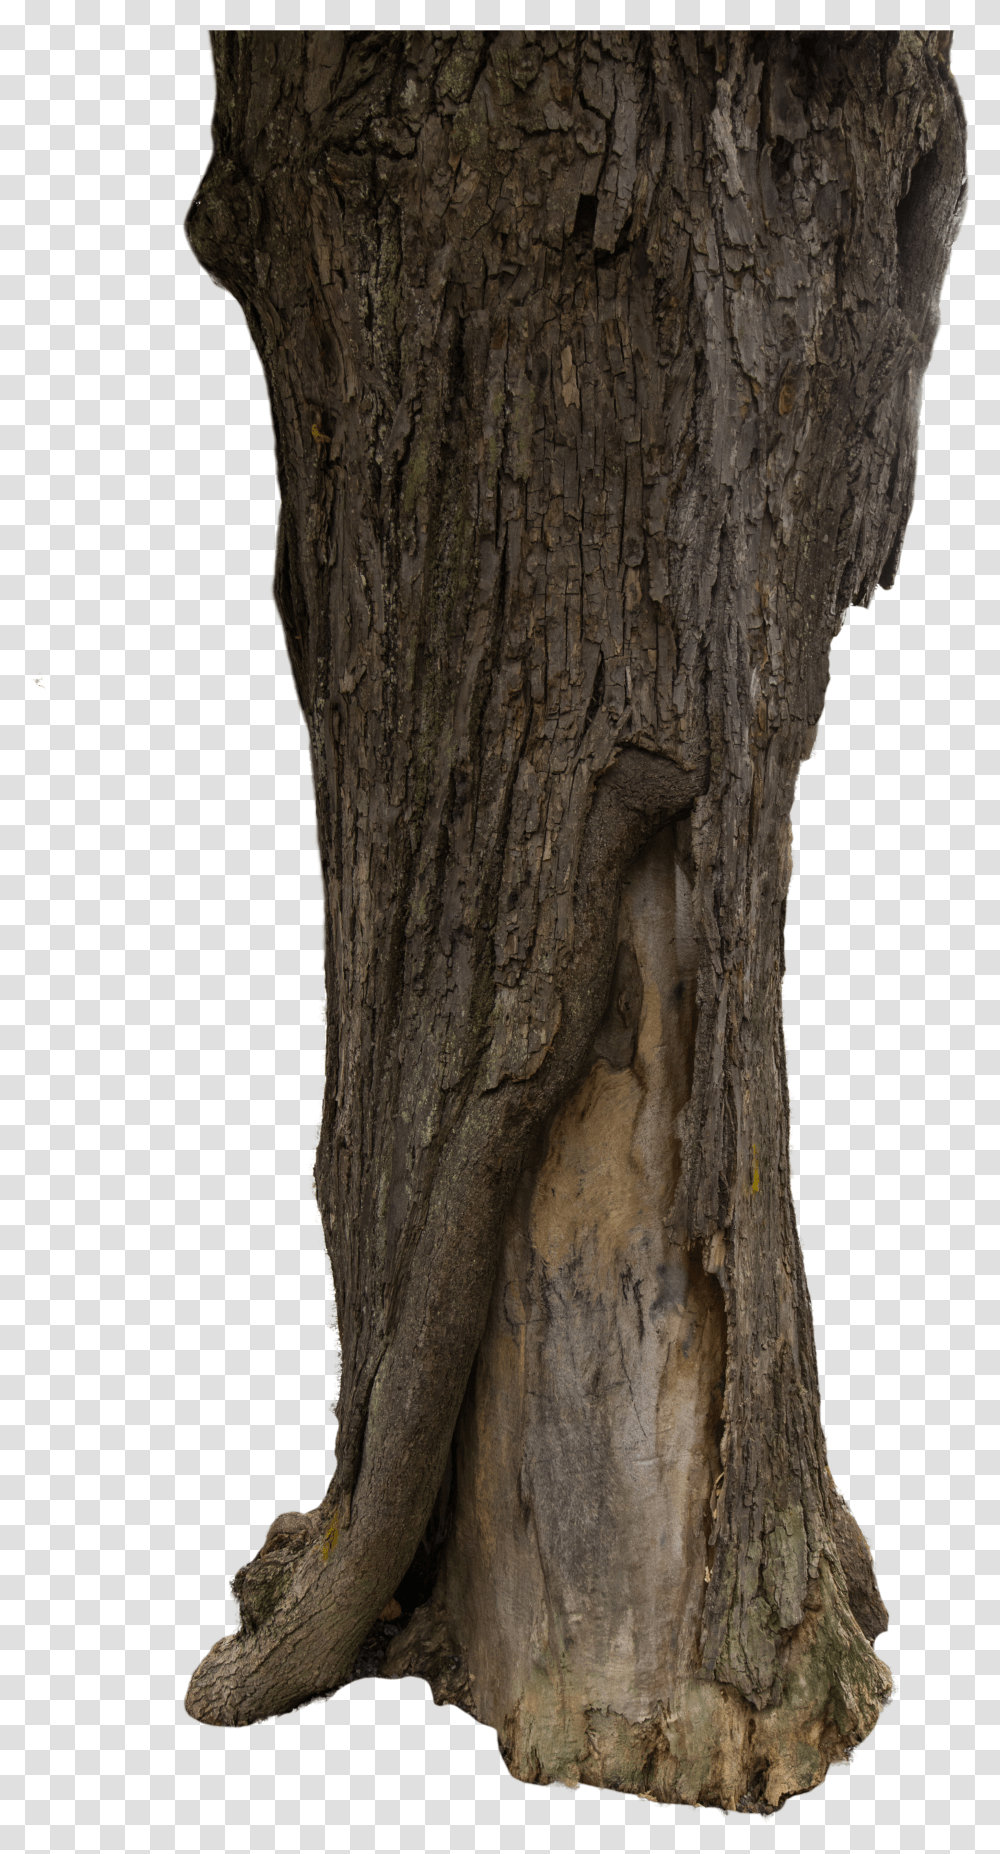 Download Tree Bark Texture Transparent Png